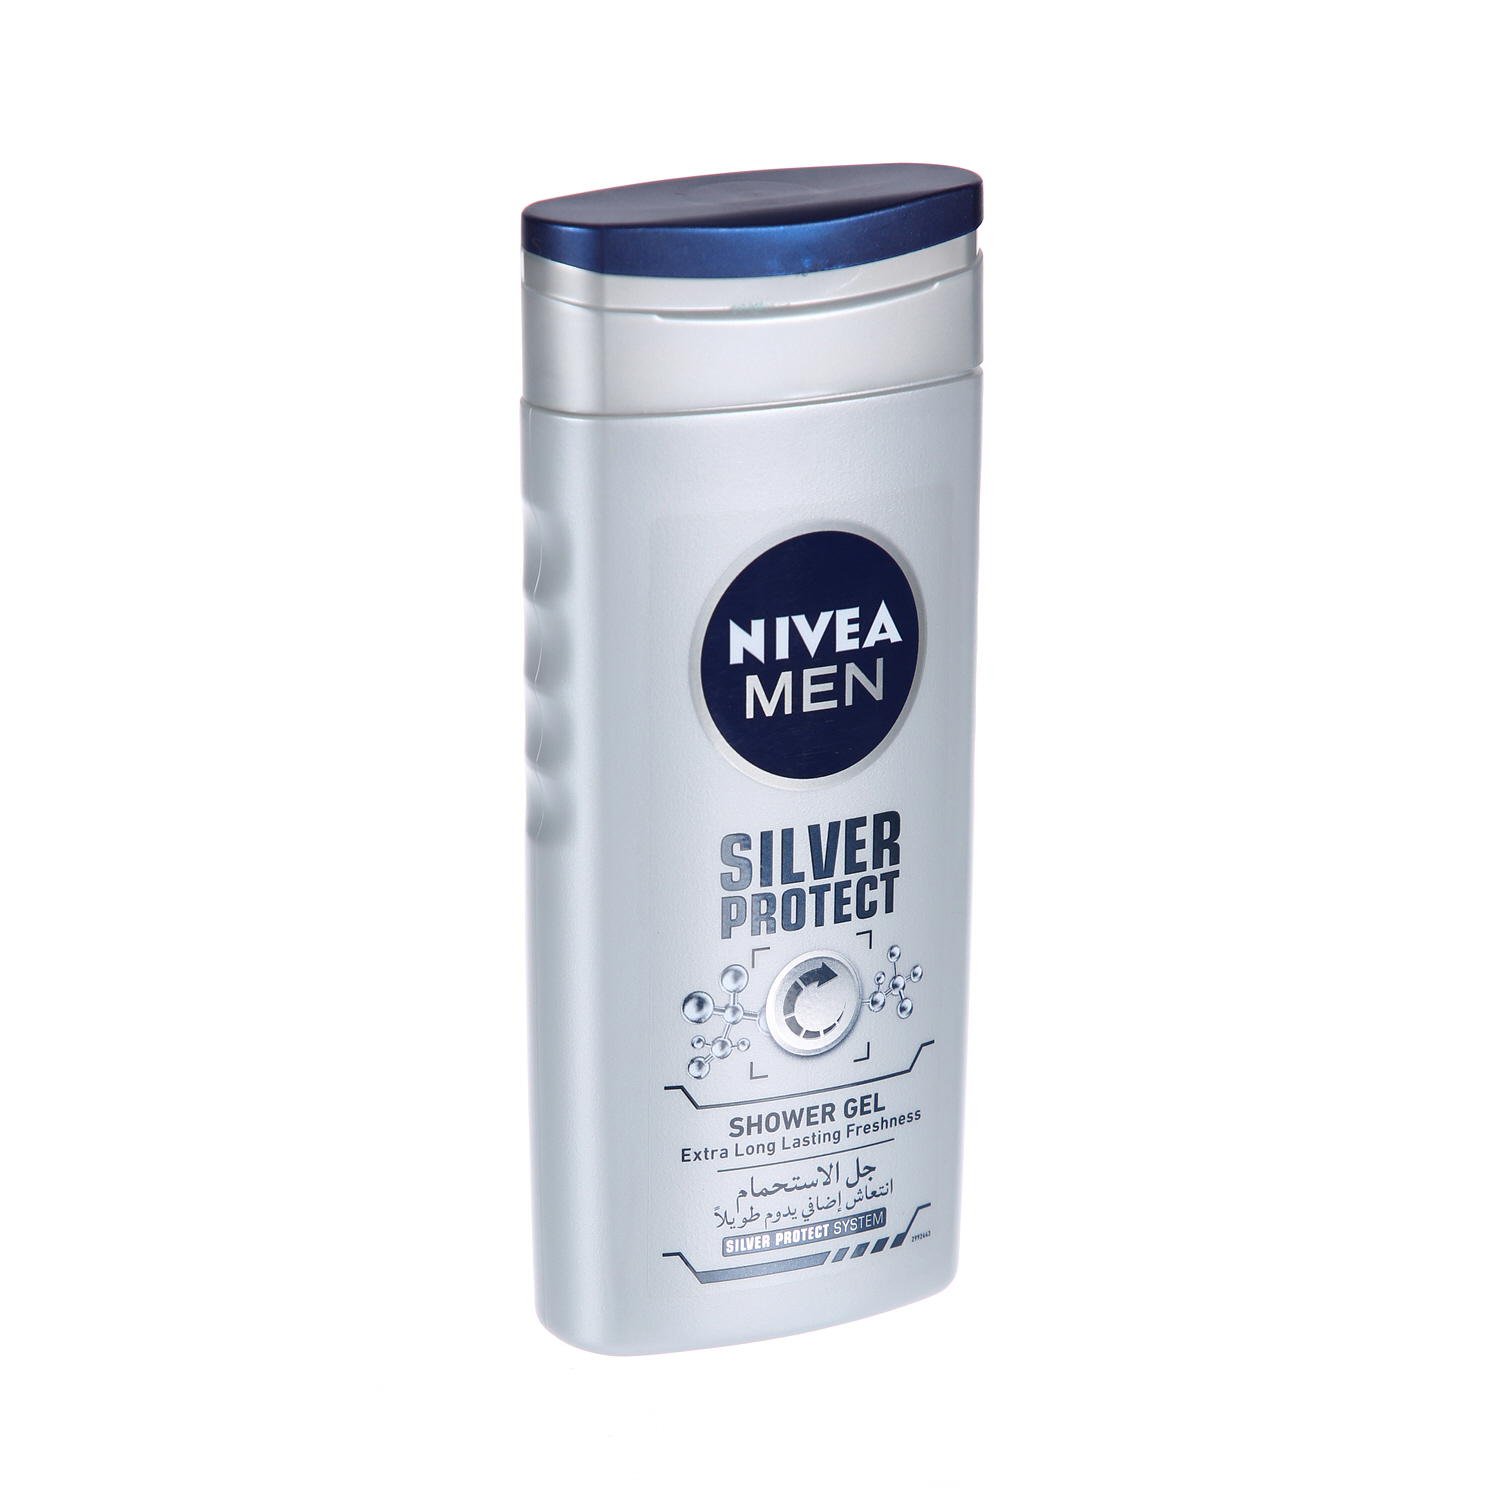 Nivea Silver Protect Shower Gel 250ml